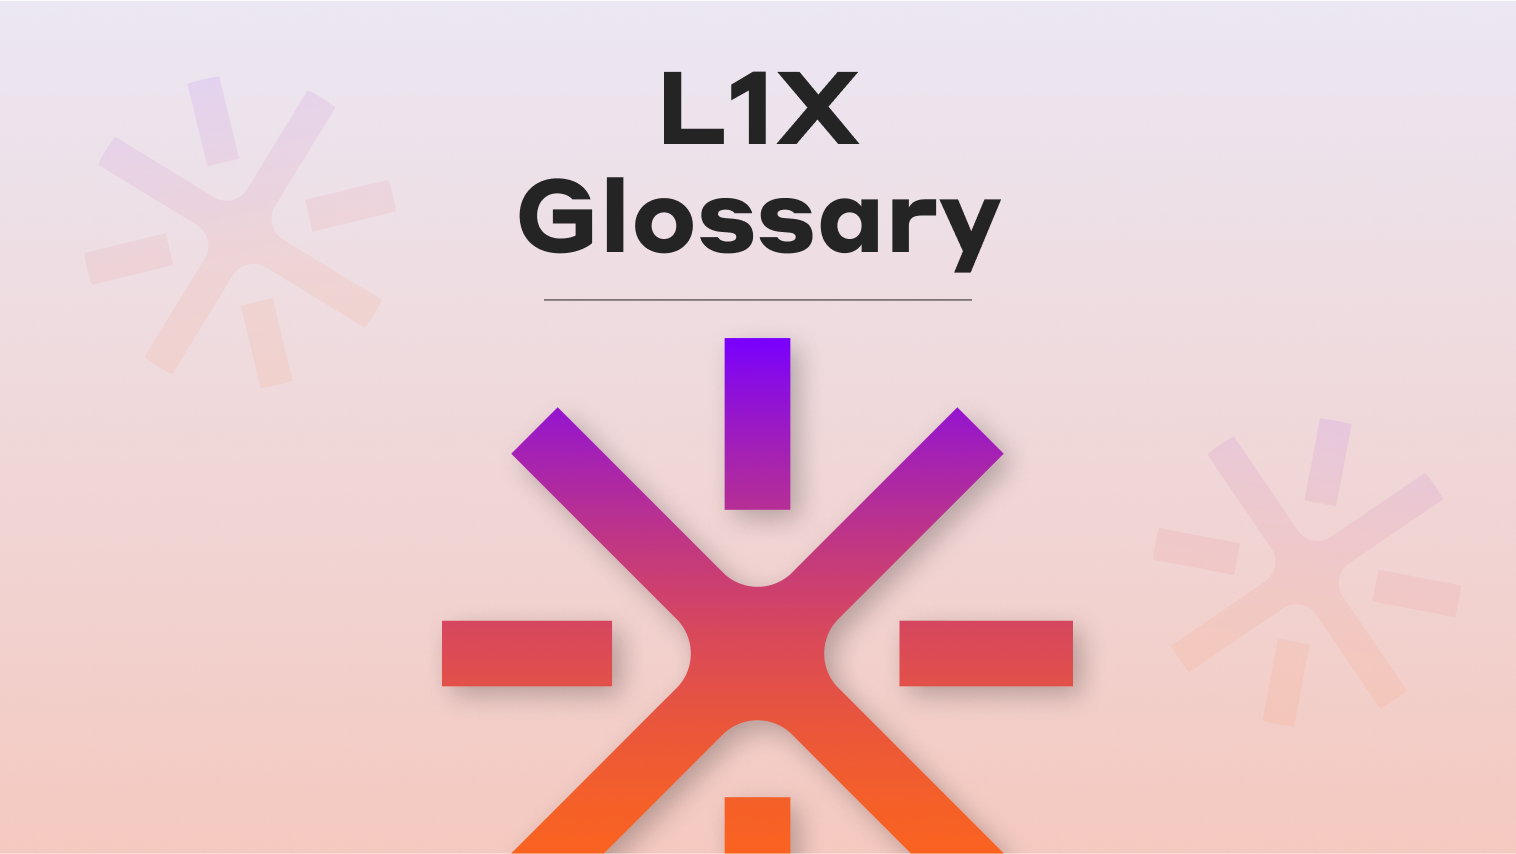 L1X Glossary